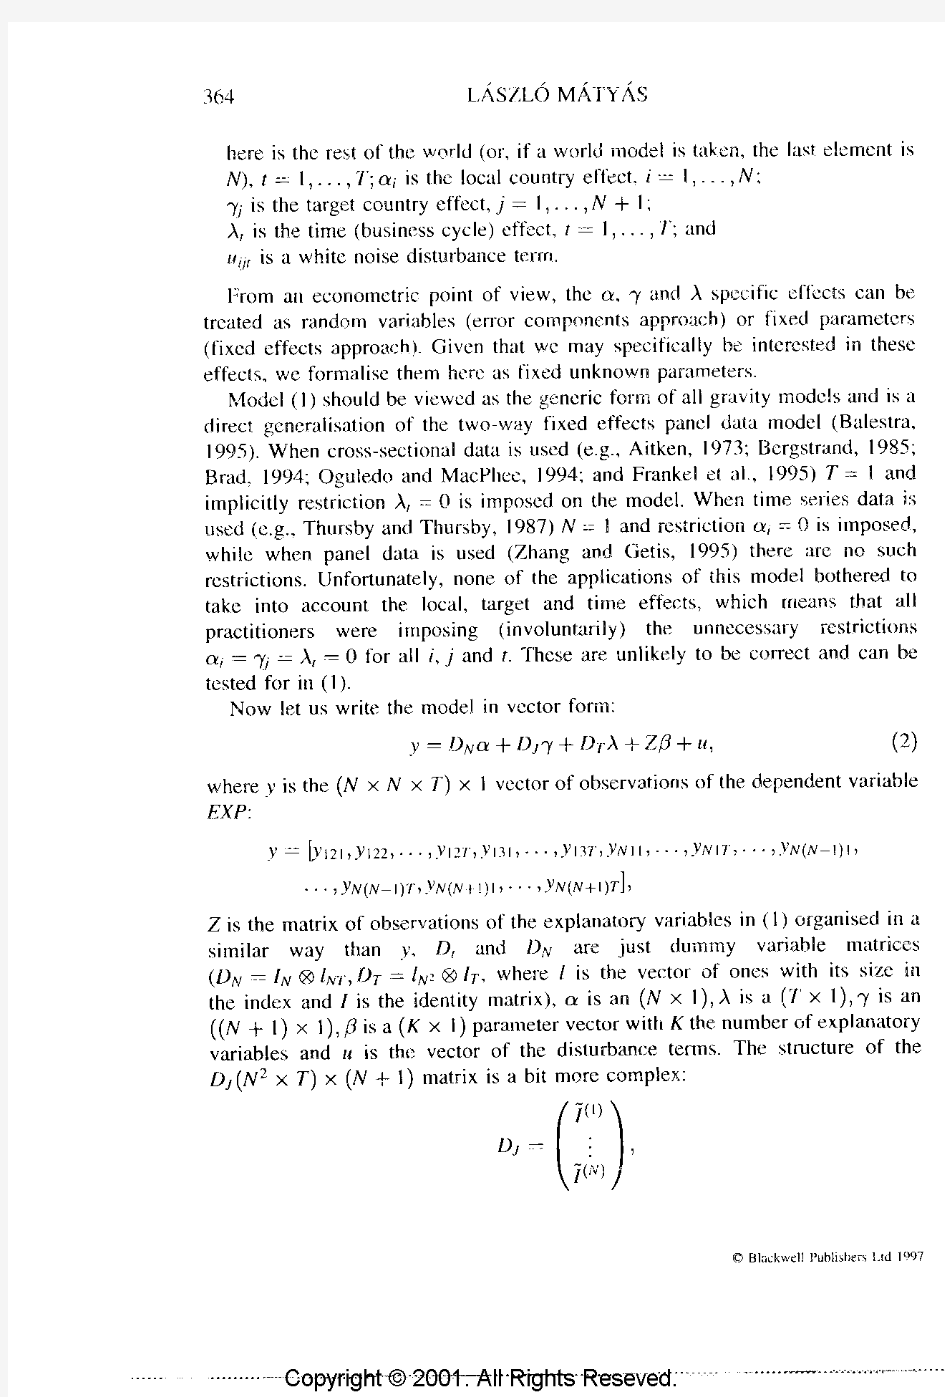 Proper econometric specification of the gravity model